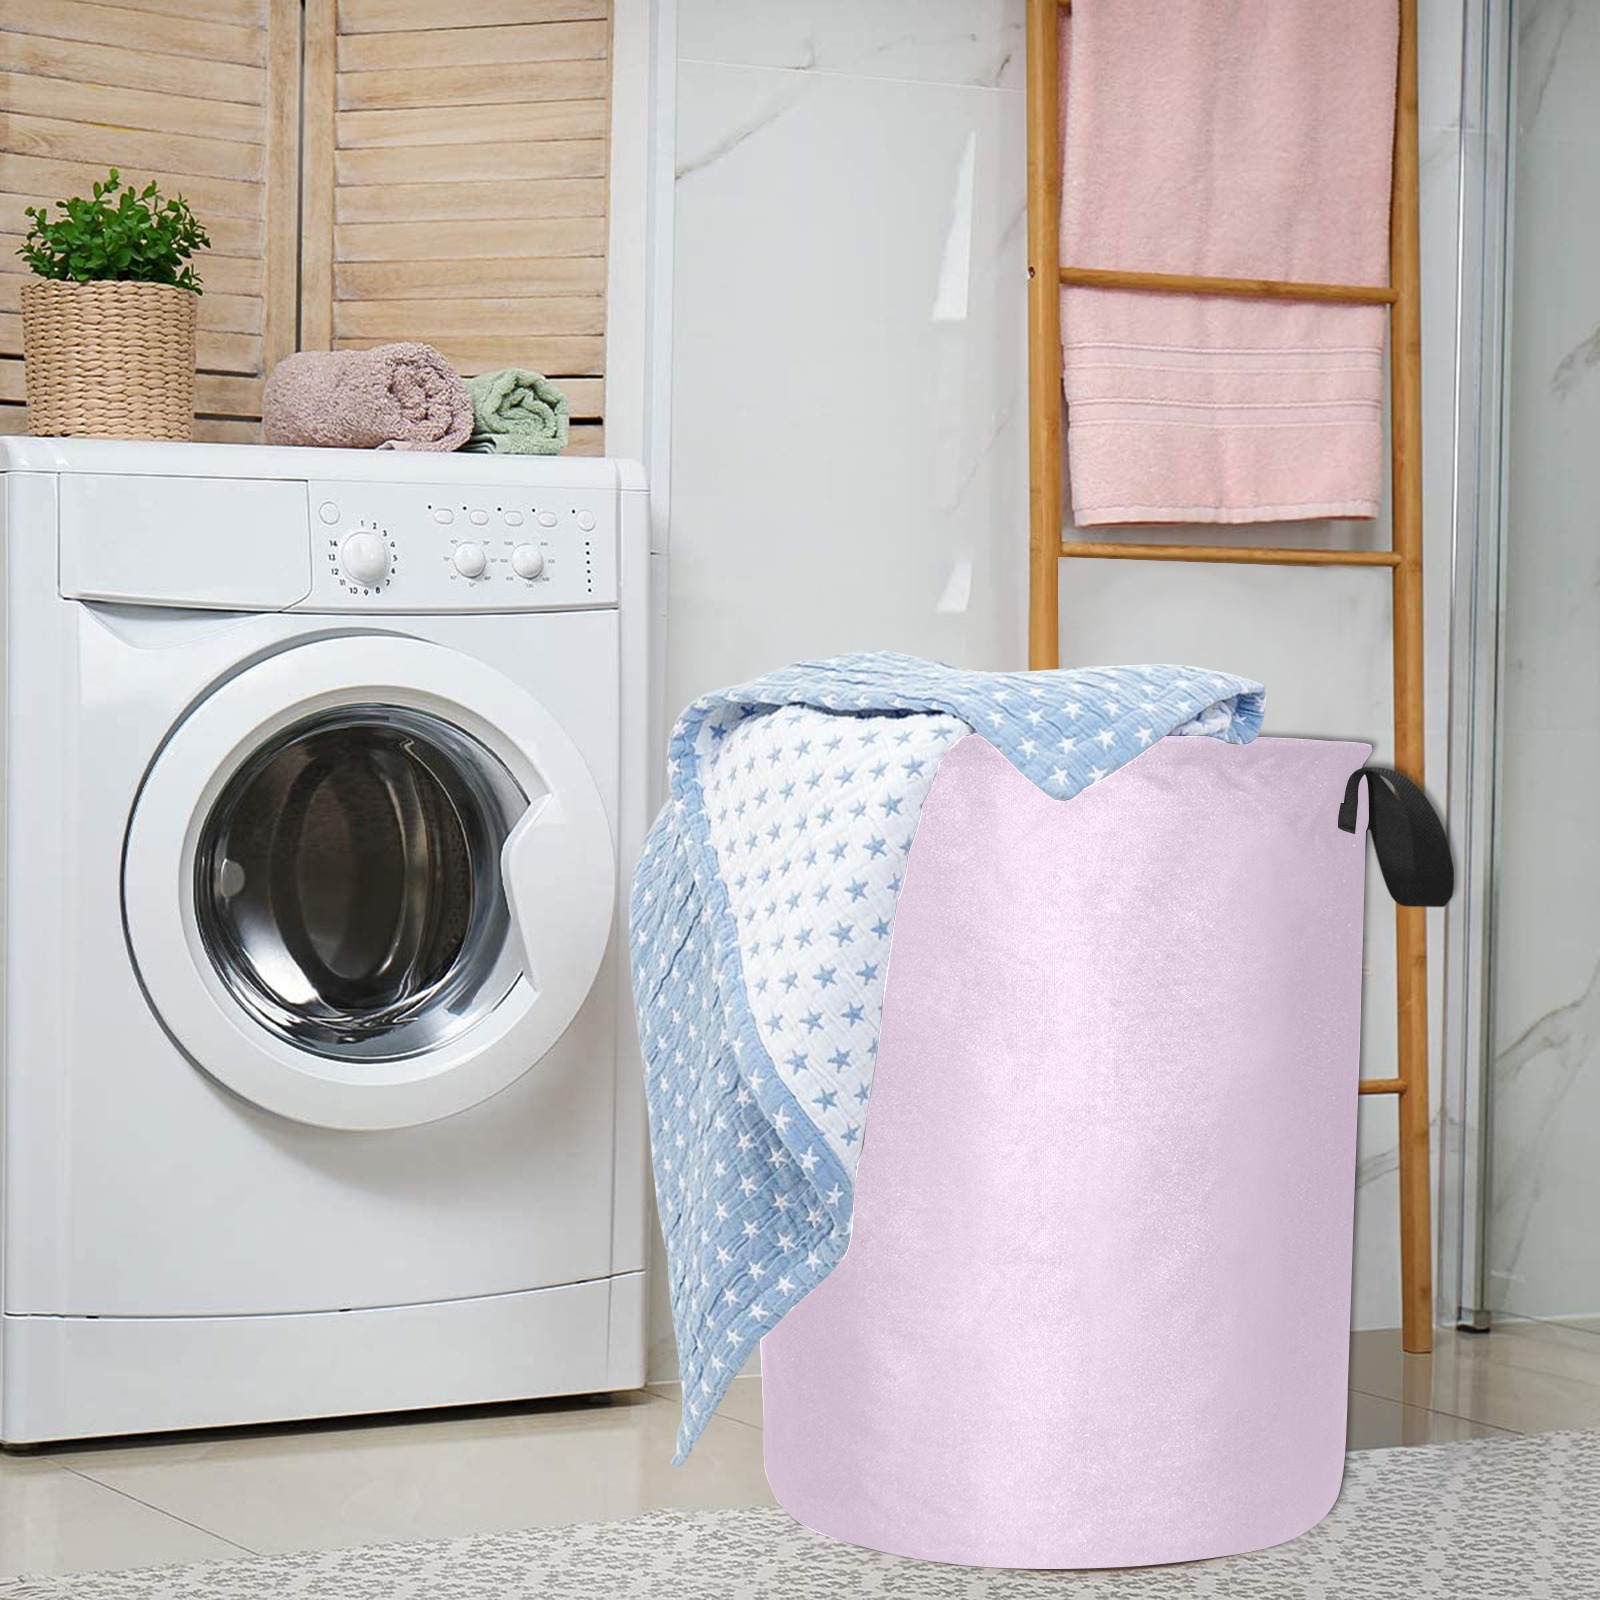 color thistle Laundry Bag (Large)